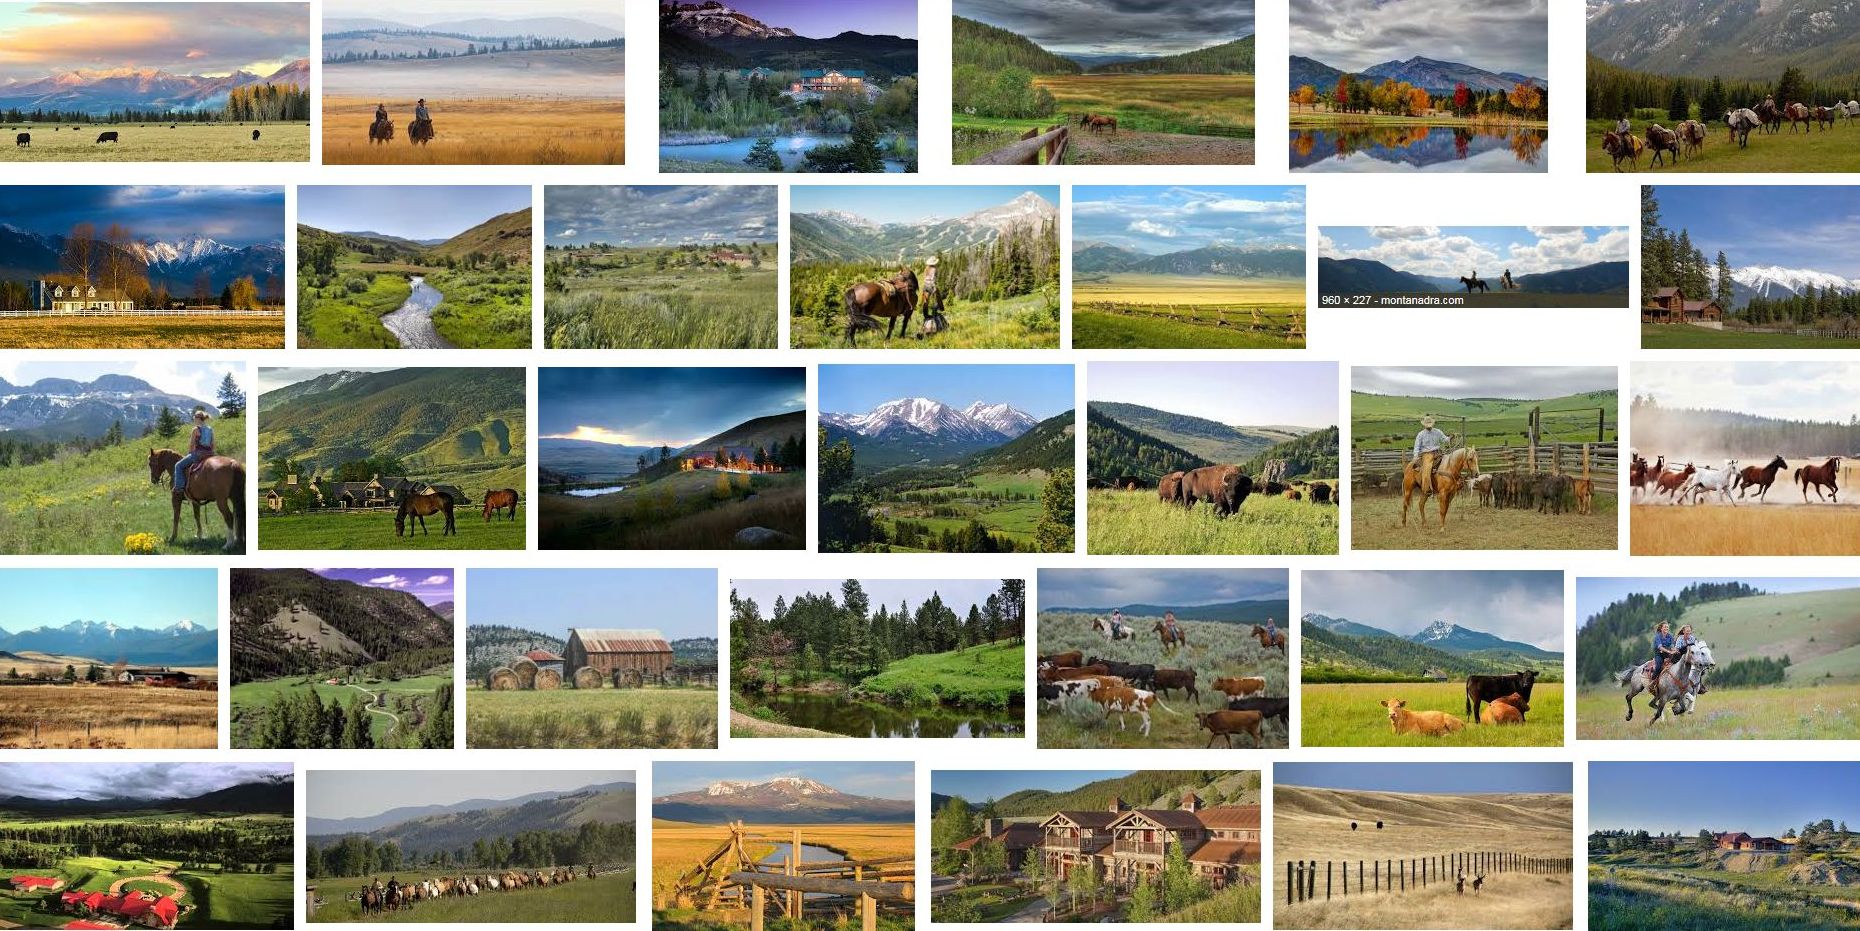 Montana Ranch Listings $700,000 To $800,000